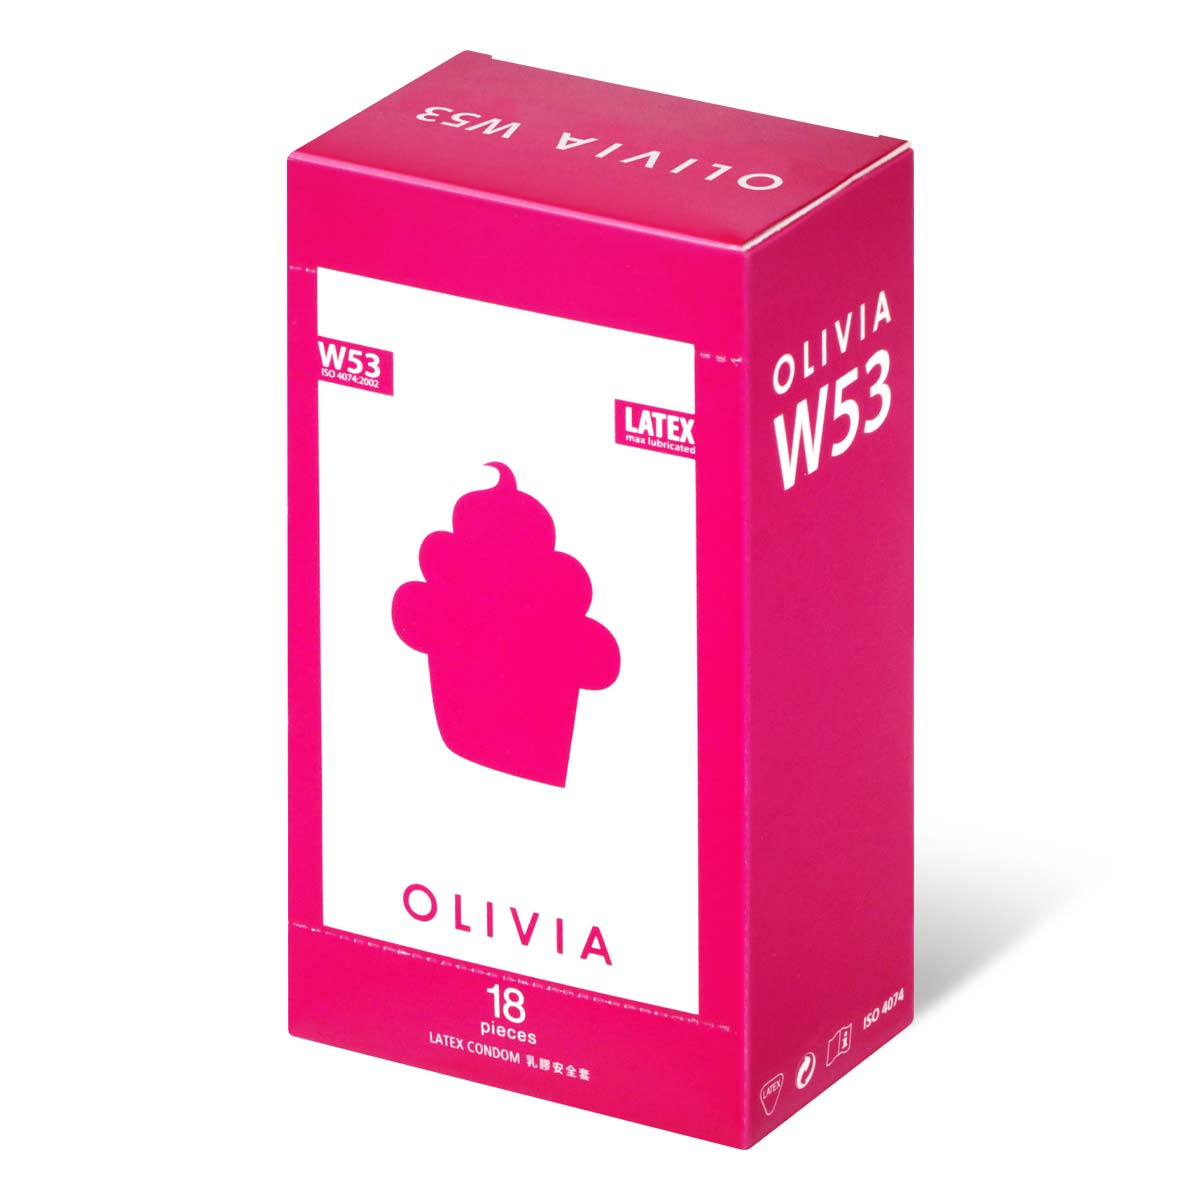 Olivia W53 max-lubricated 18's Pack Latex Condom-p_1